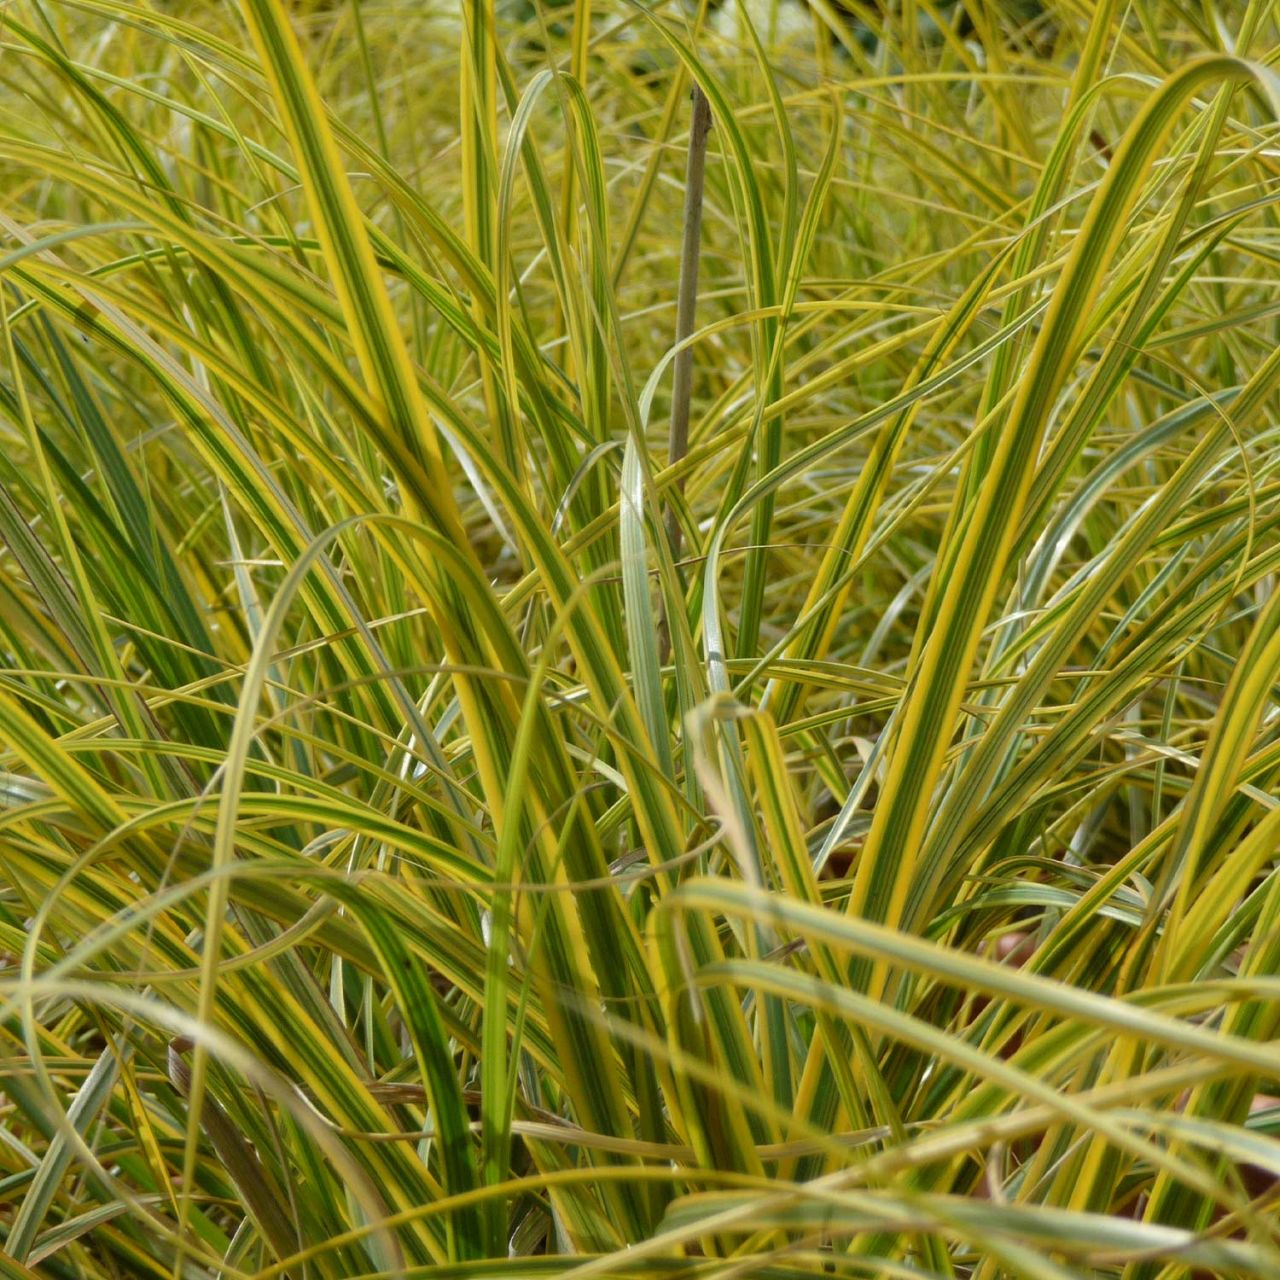  Bunte /Gold Segge 'Evergold' Staude des Jahres 2015 - Carex oshimensis